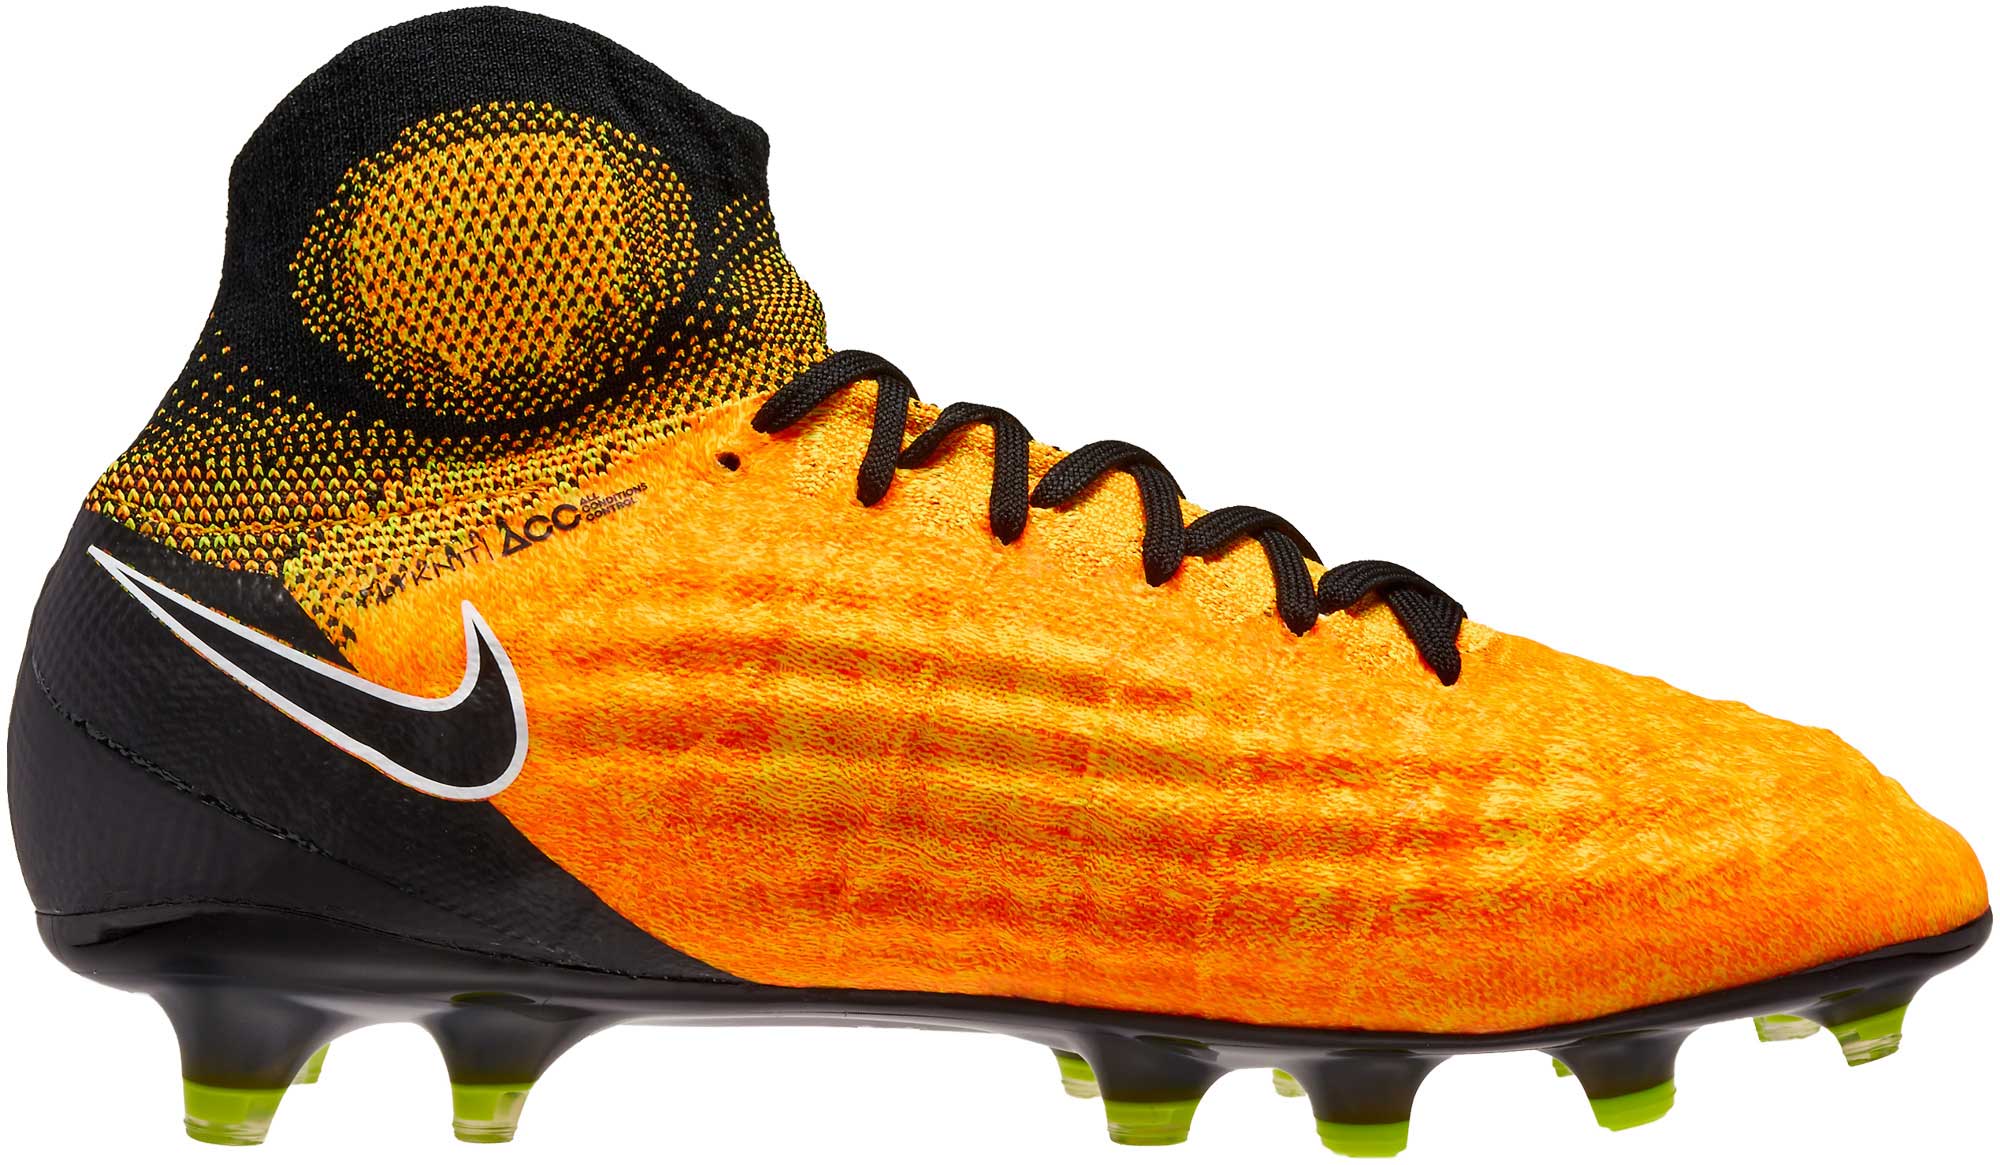 Nike Magista Obra II FG Soccer Cleats - Laser Orange & Black - Soccer Master